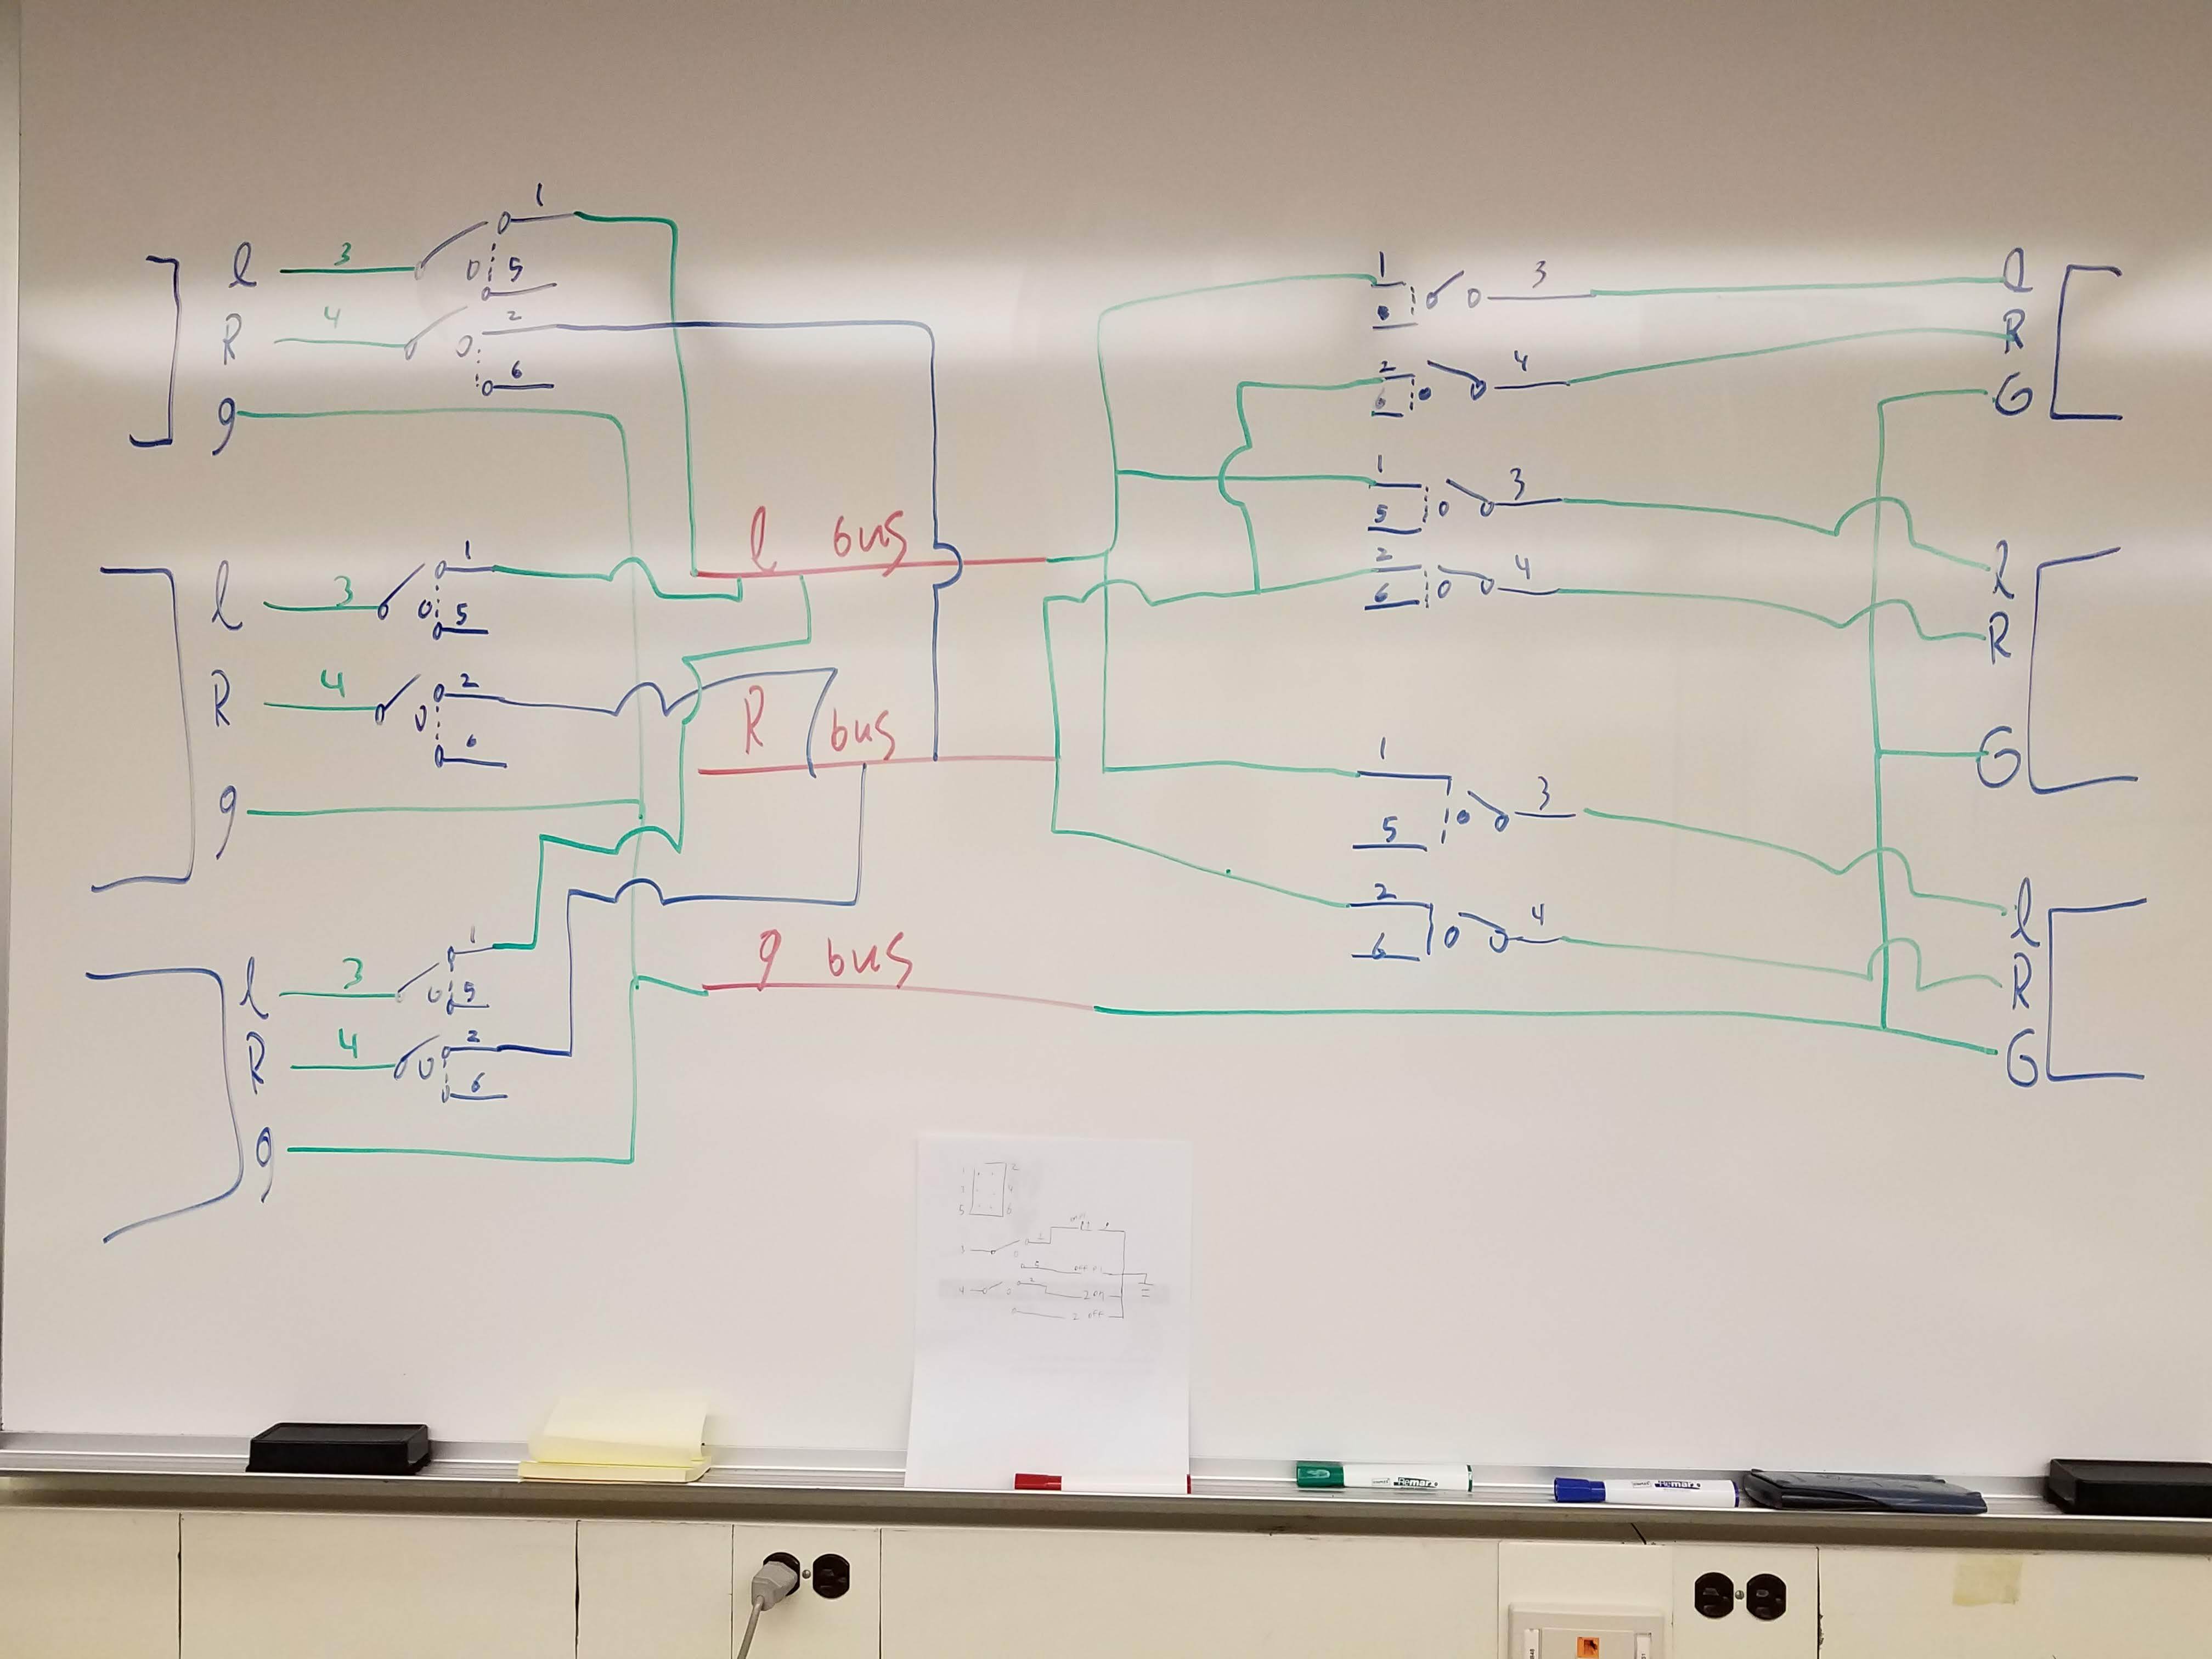 Wiring diagram on white board